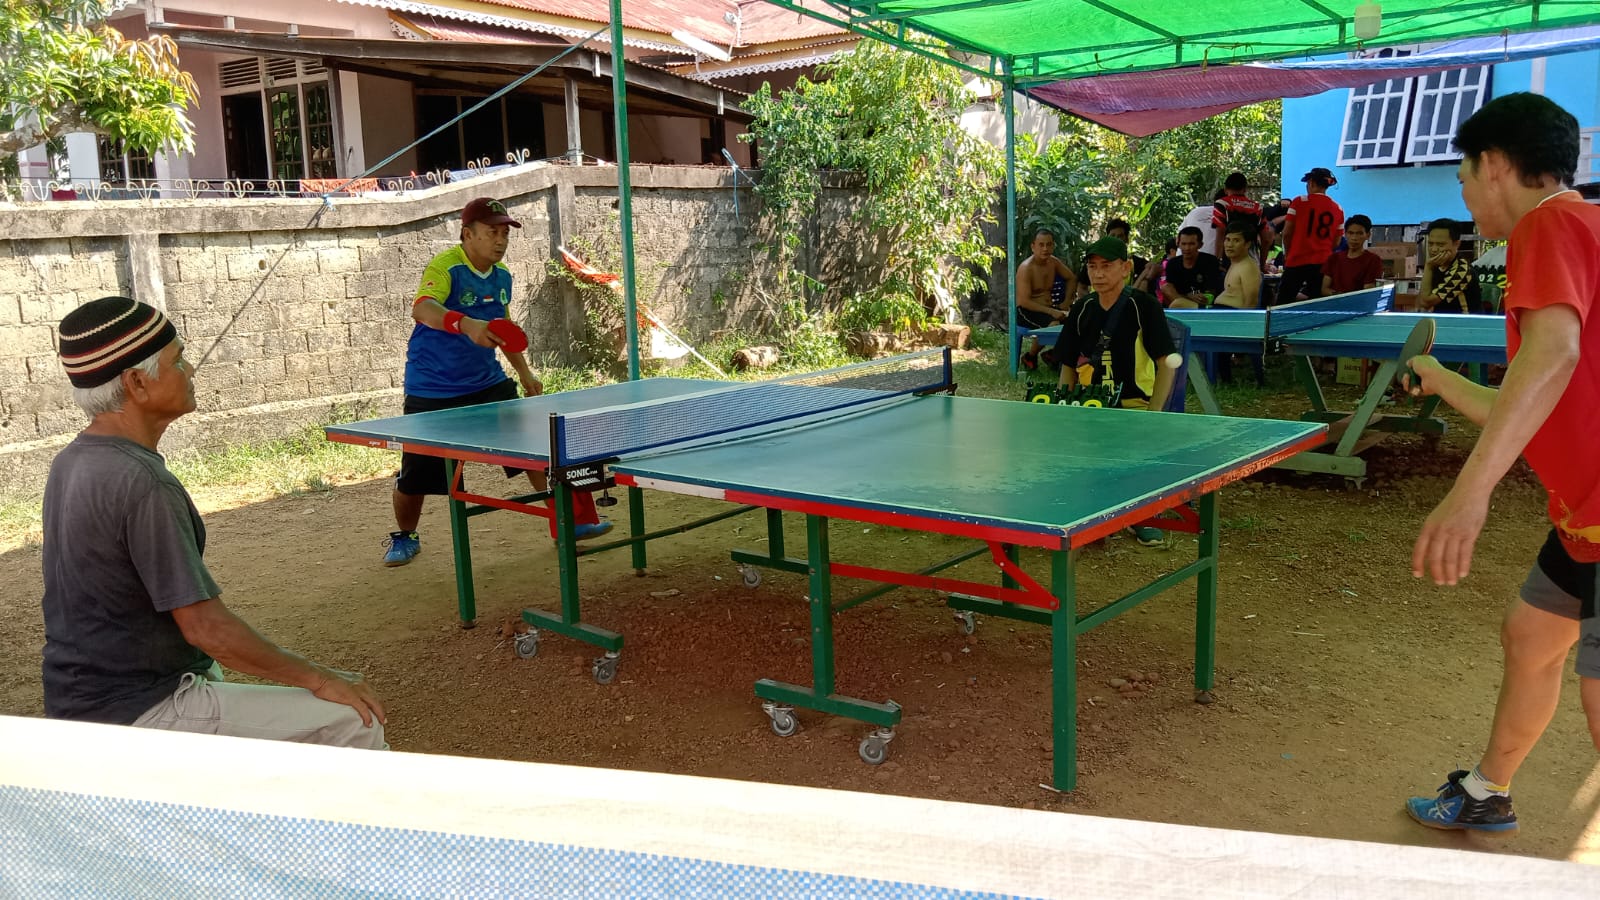 Ketua Umum KONI Kapuas Hulu yang juga Ketua Pengkab PTMSI Kapuas Hulu, Anwar Sanusi alias Bang Boy mengikuti kejuaraan tenis meja. (Foto: Ishaq/KalbarOnline.com)